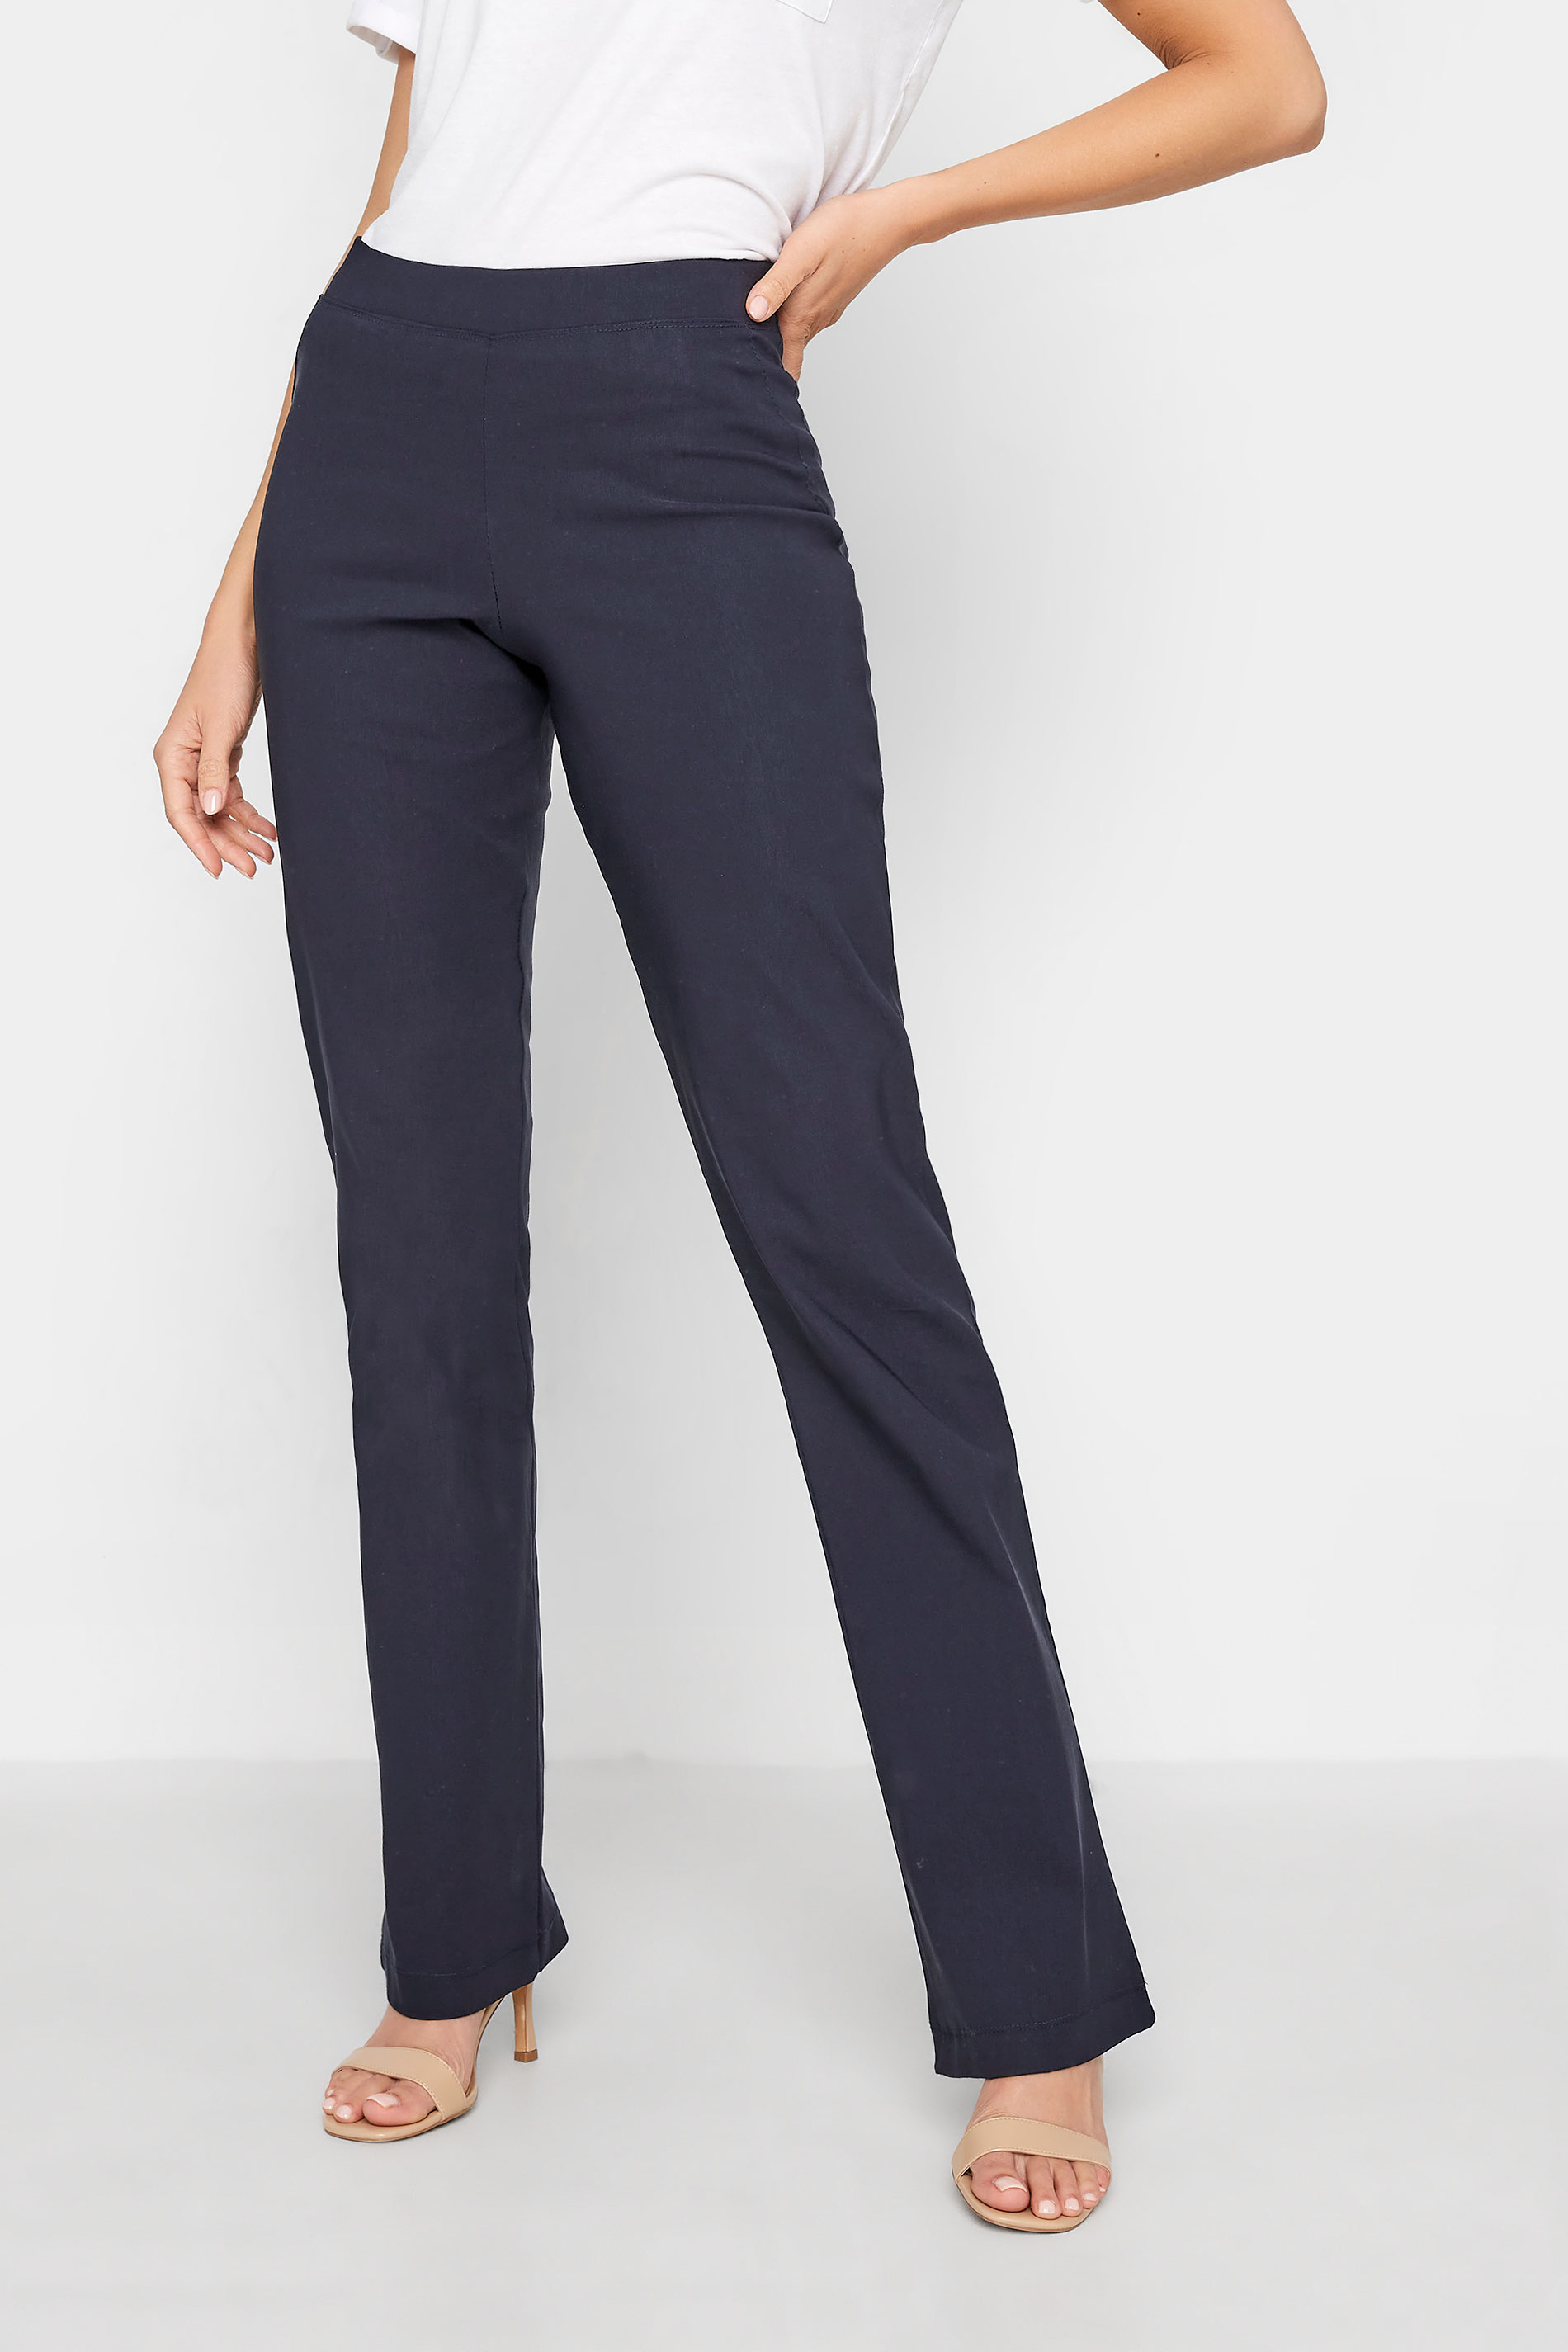 Tall Women's LTS Navy Blue Stretch Bootcut Trousers | Long Tall Sally  1